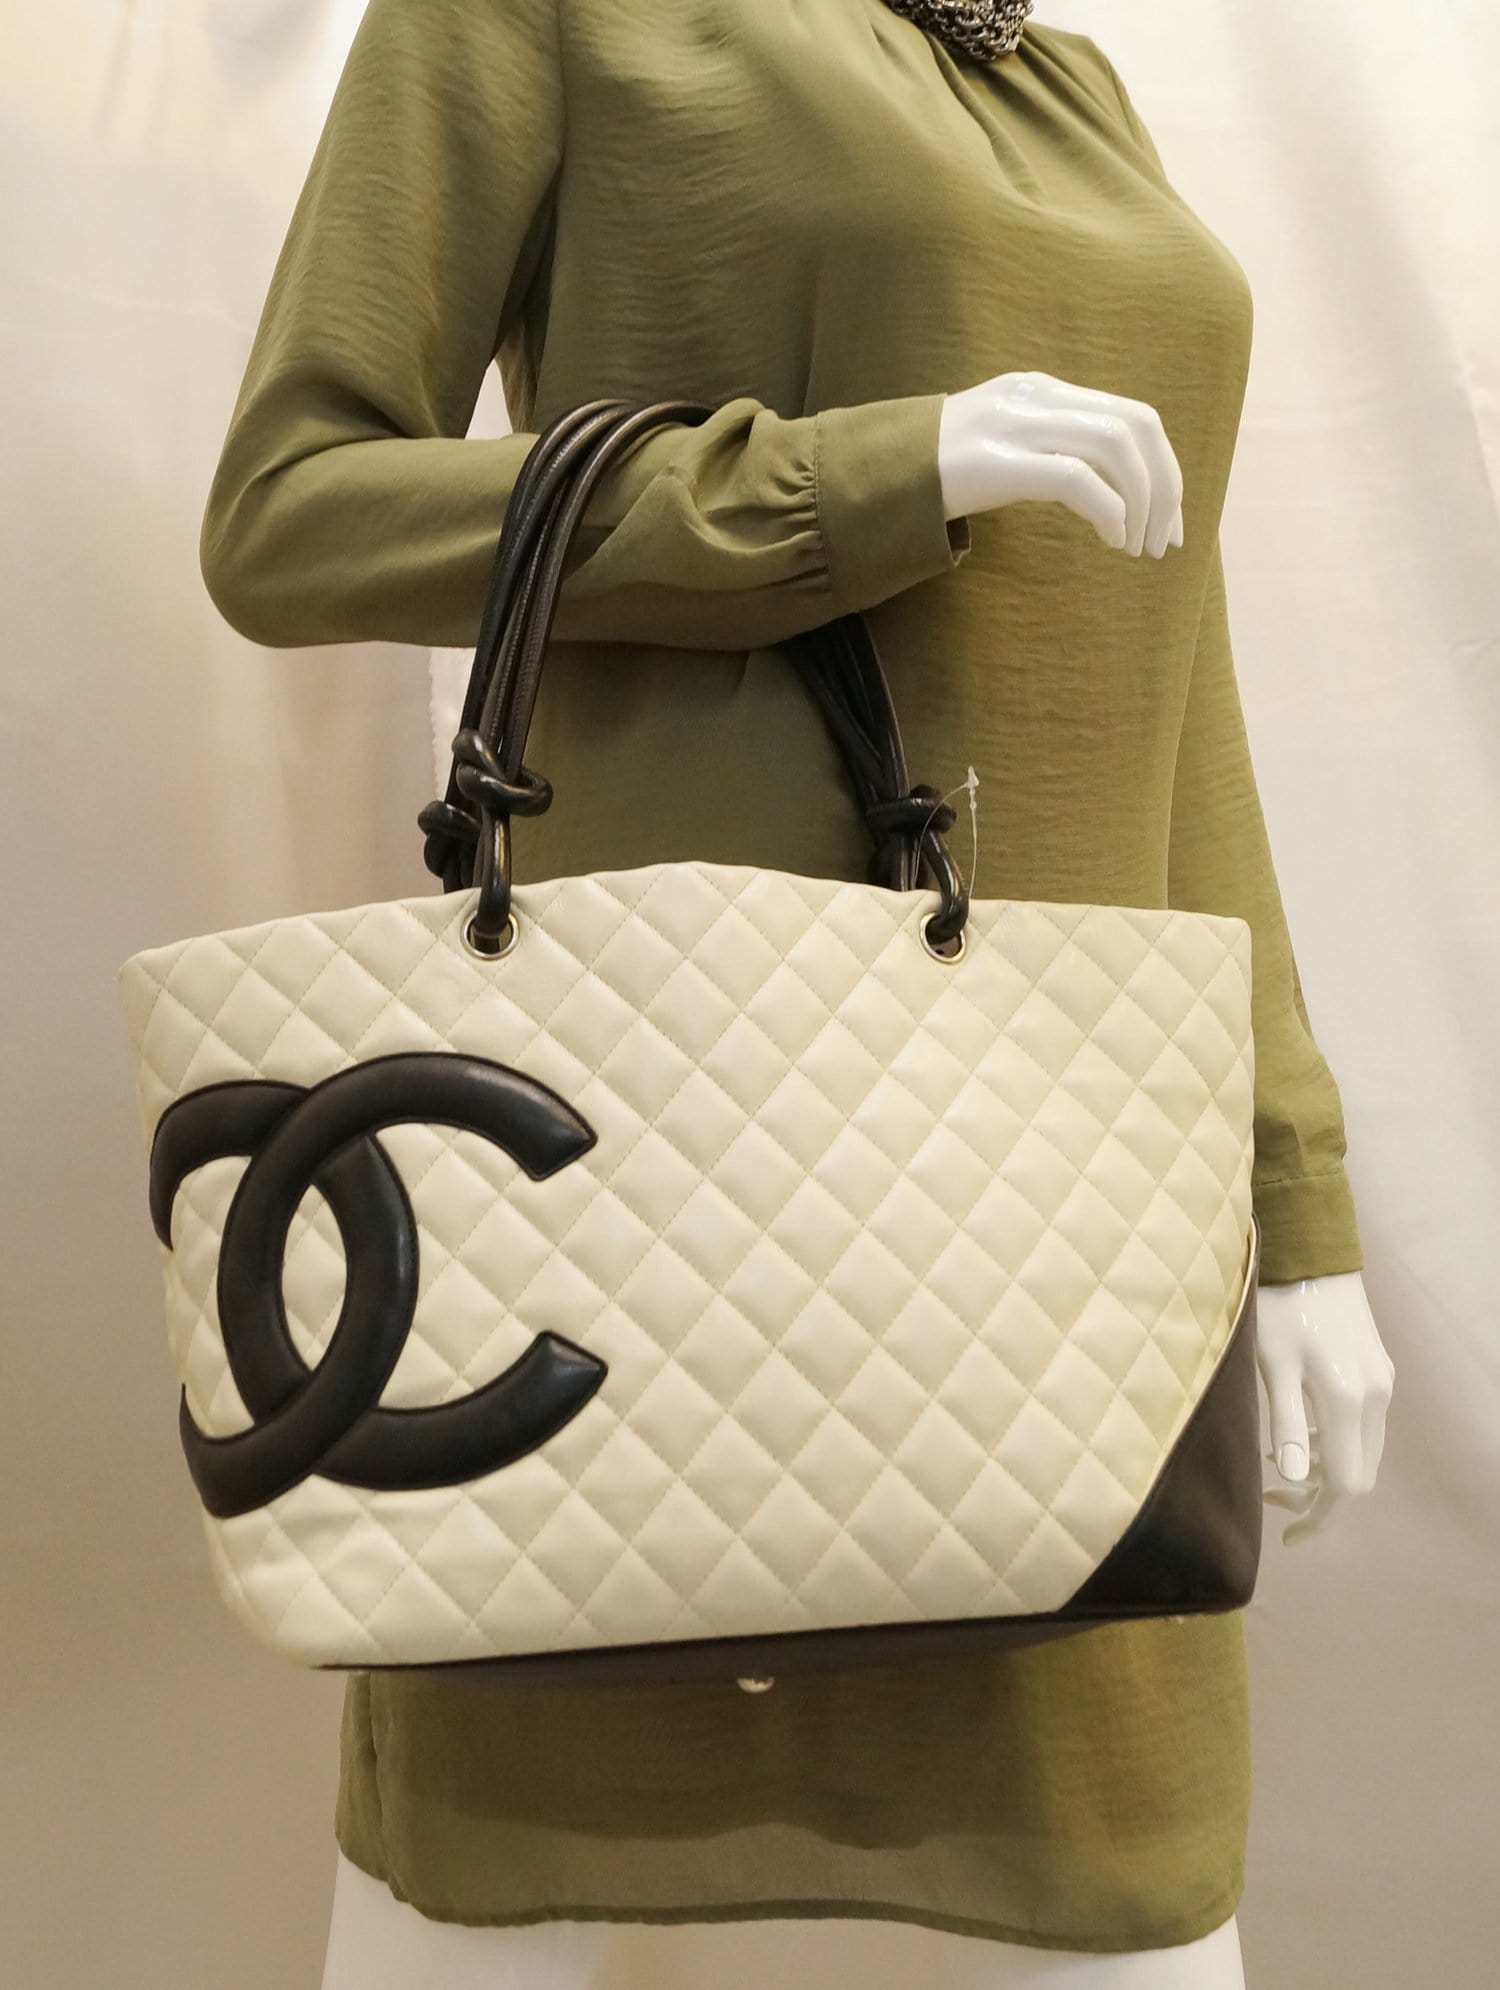 Where To Buy Chanel Handbags | Literacy Basics